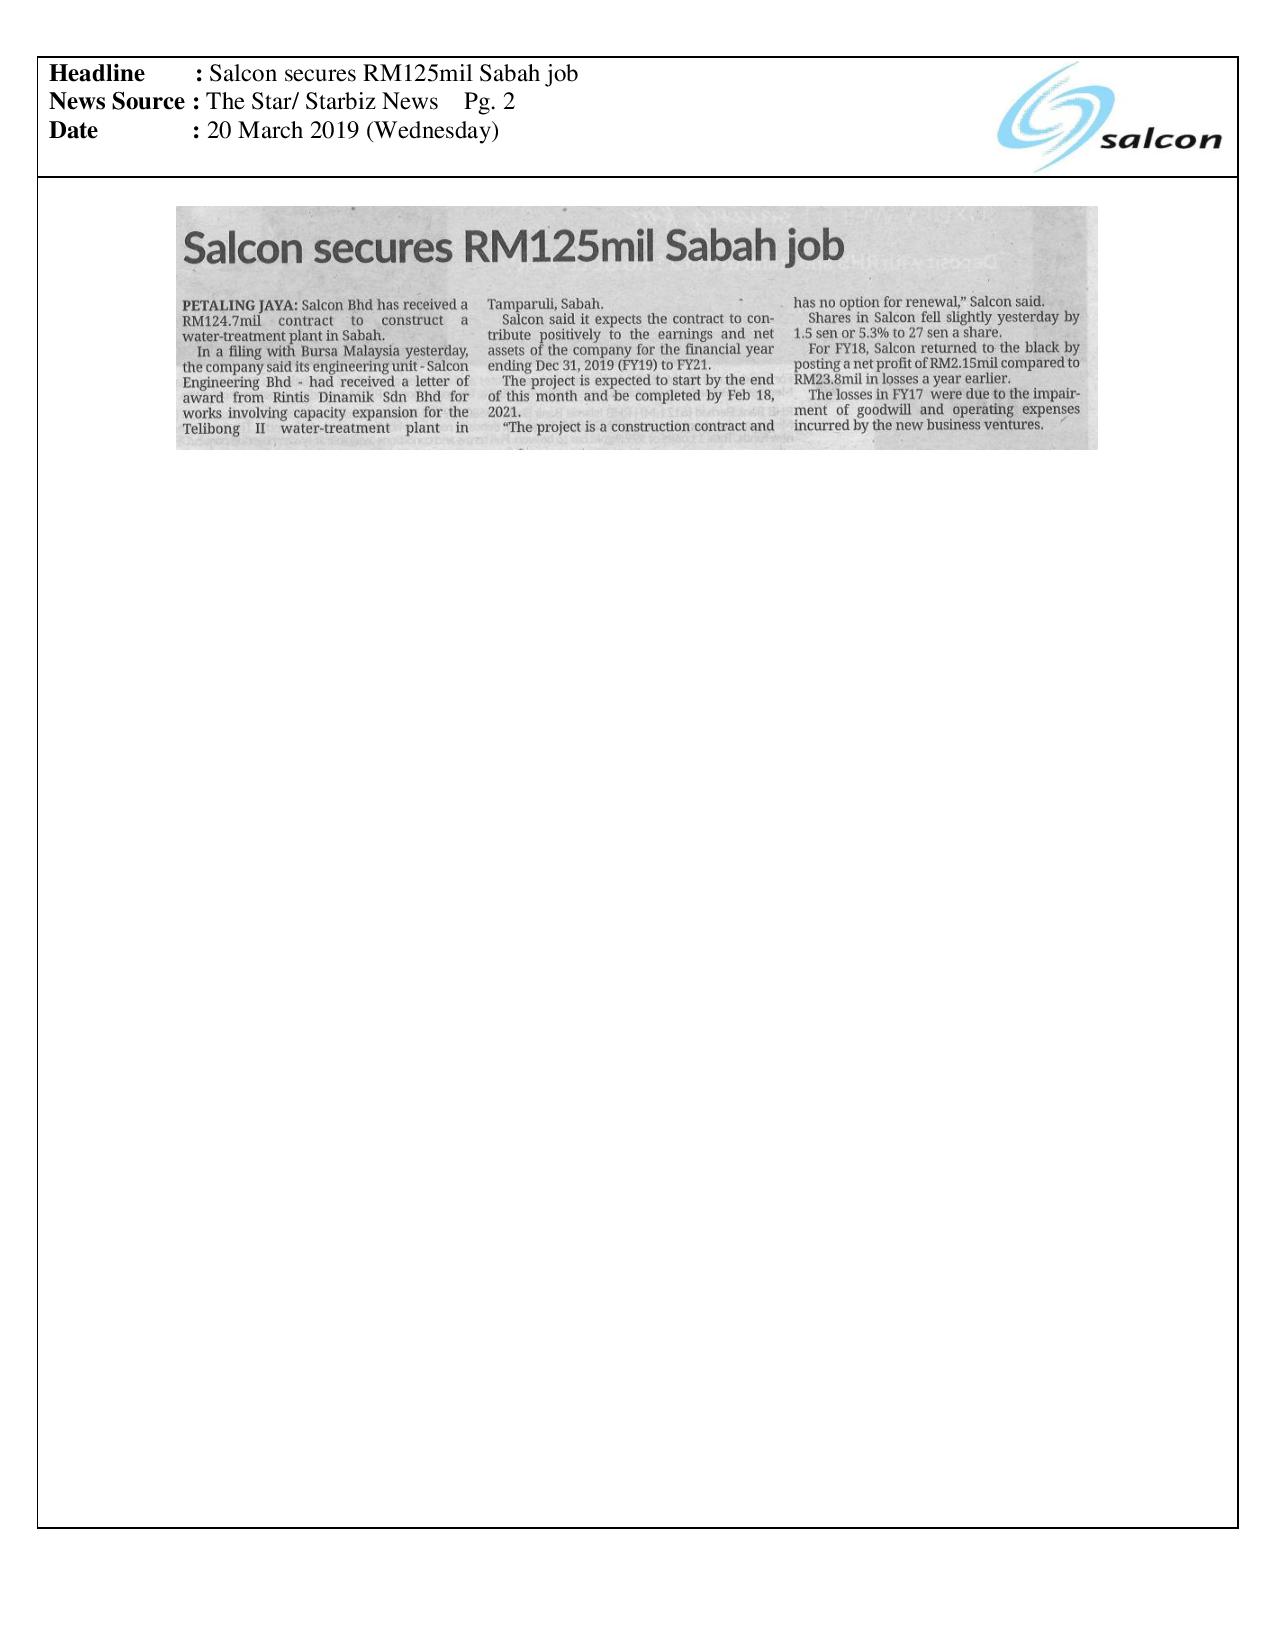 Salcon secures RM125mil Sabah job